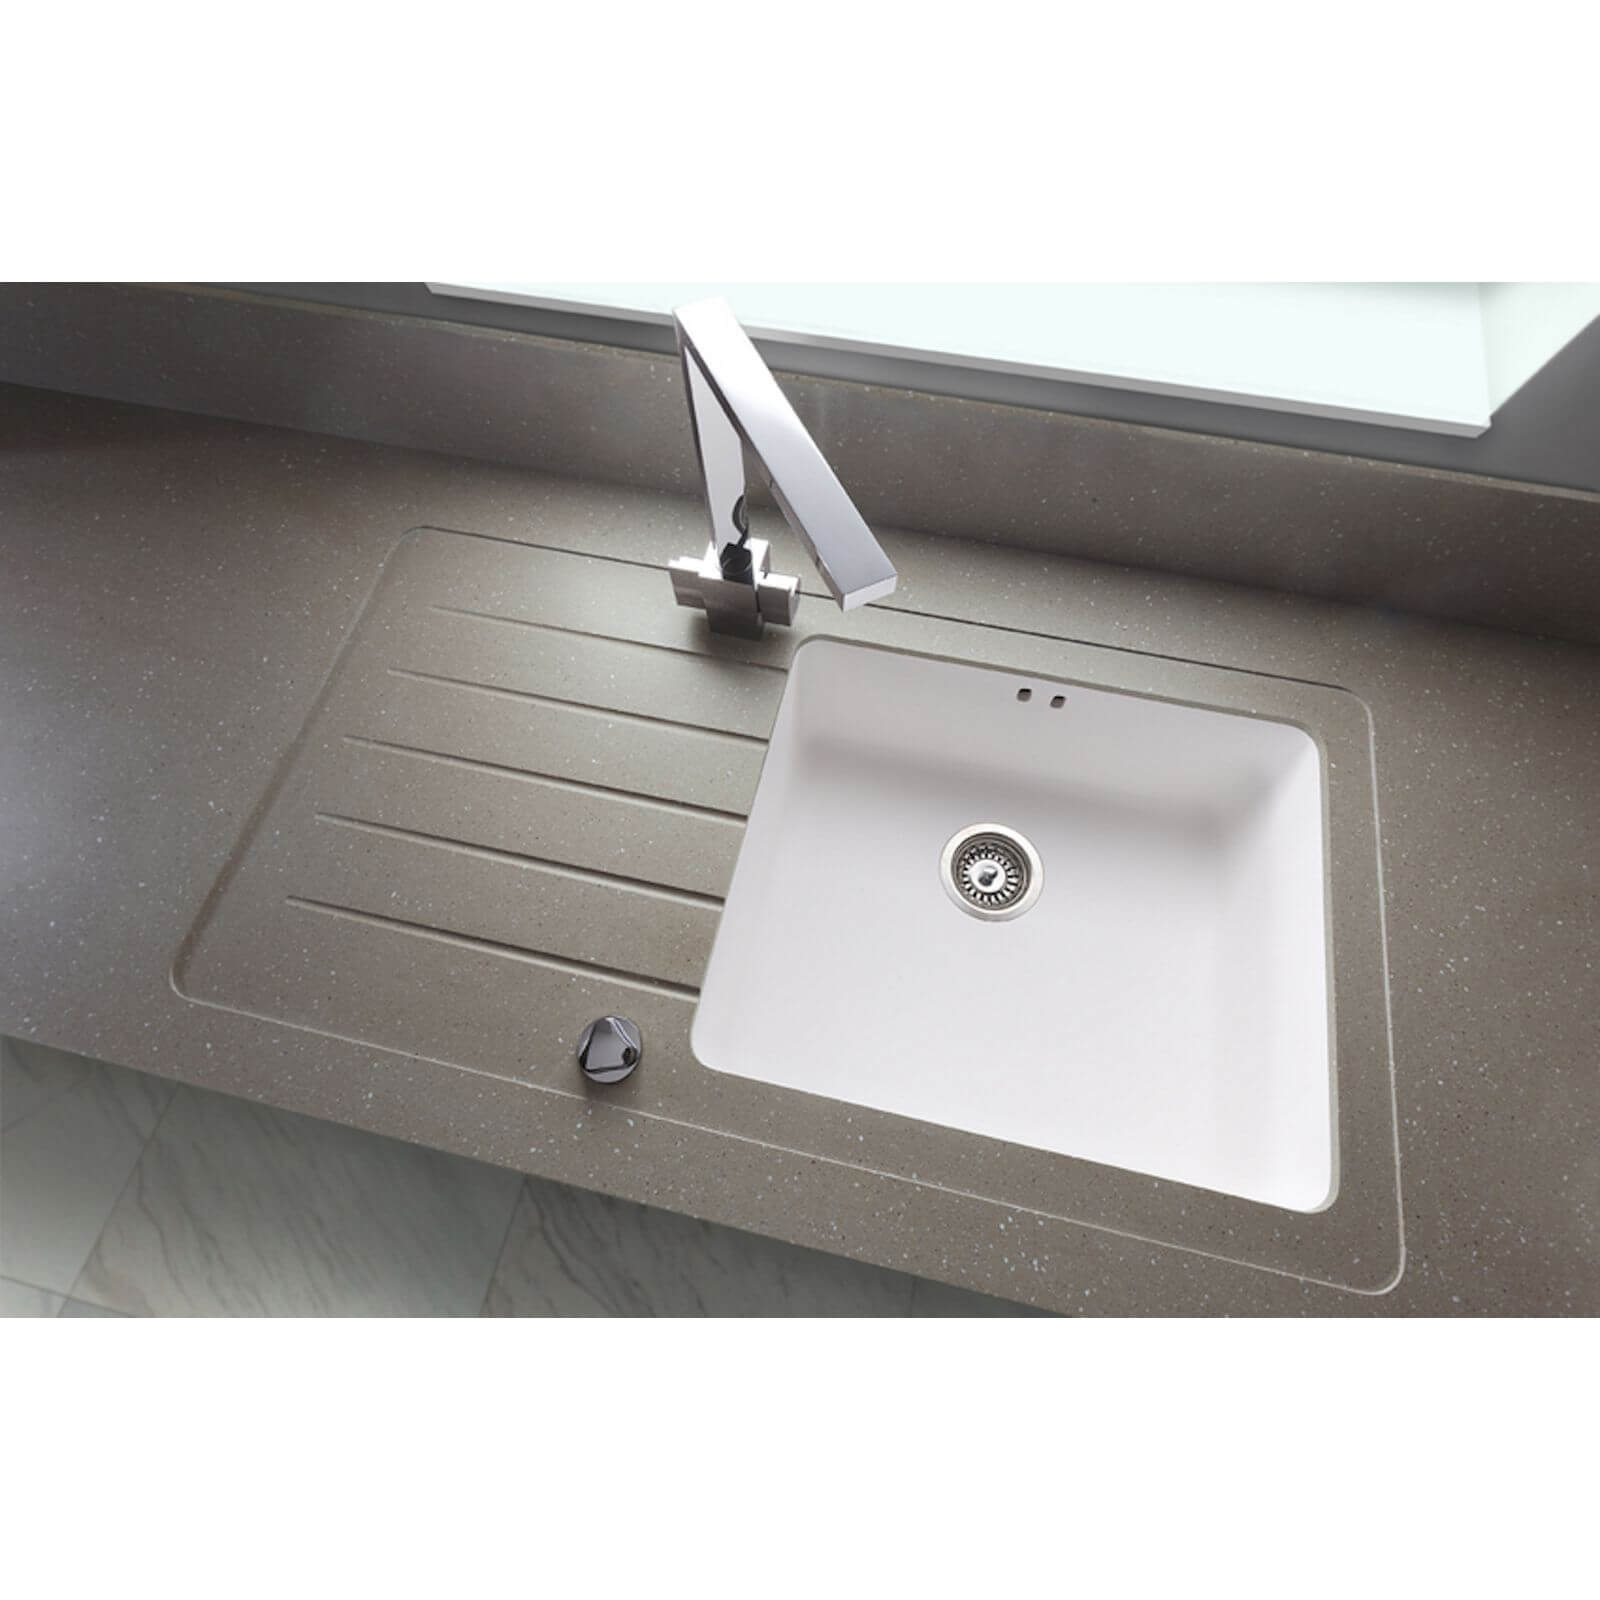 Maia Brazilian Greige Kitchen Sink Worktop - Universal Super Large Bowl - 3600 x 600 x 28mm